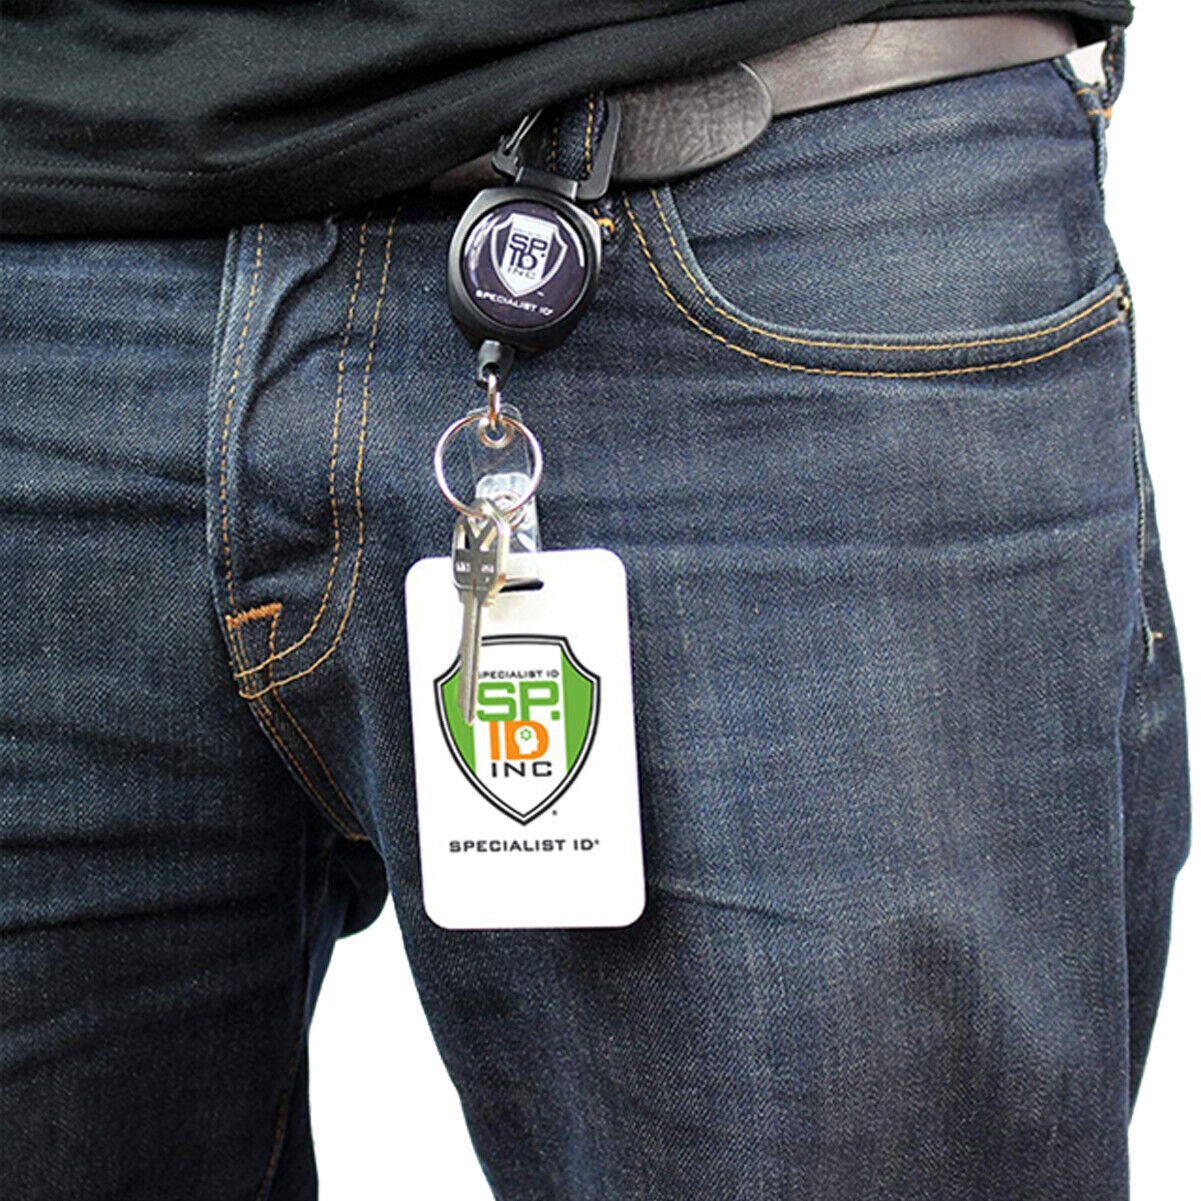 5 Heavy Duty Sidekick Badge Reels for Keys & Cards by Key Bak & Specialist ID Specialist ID SPID-3270 - фотография #9